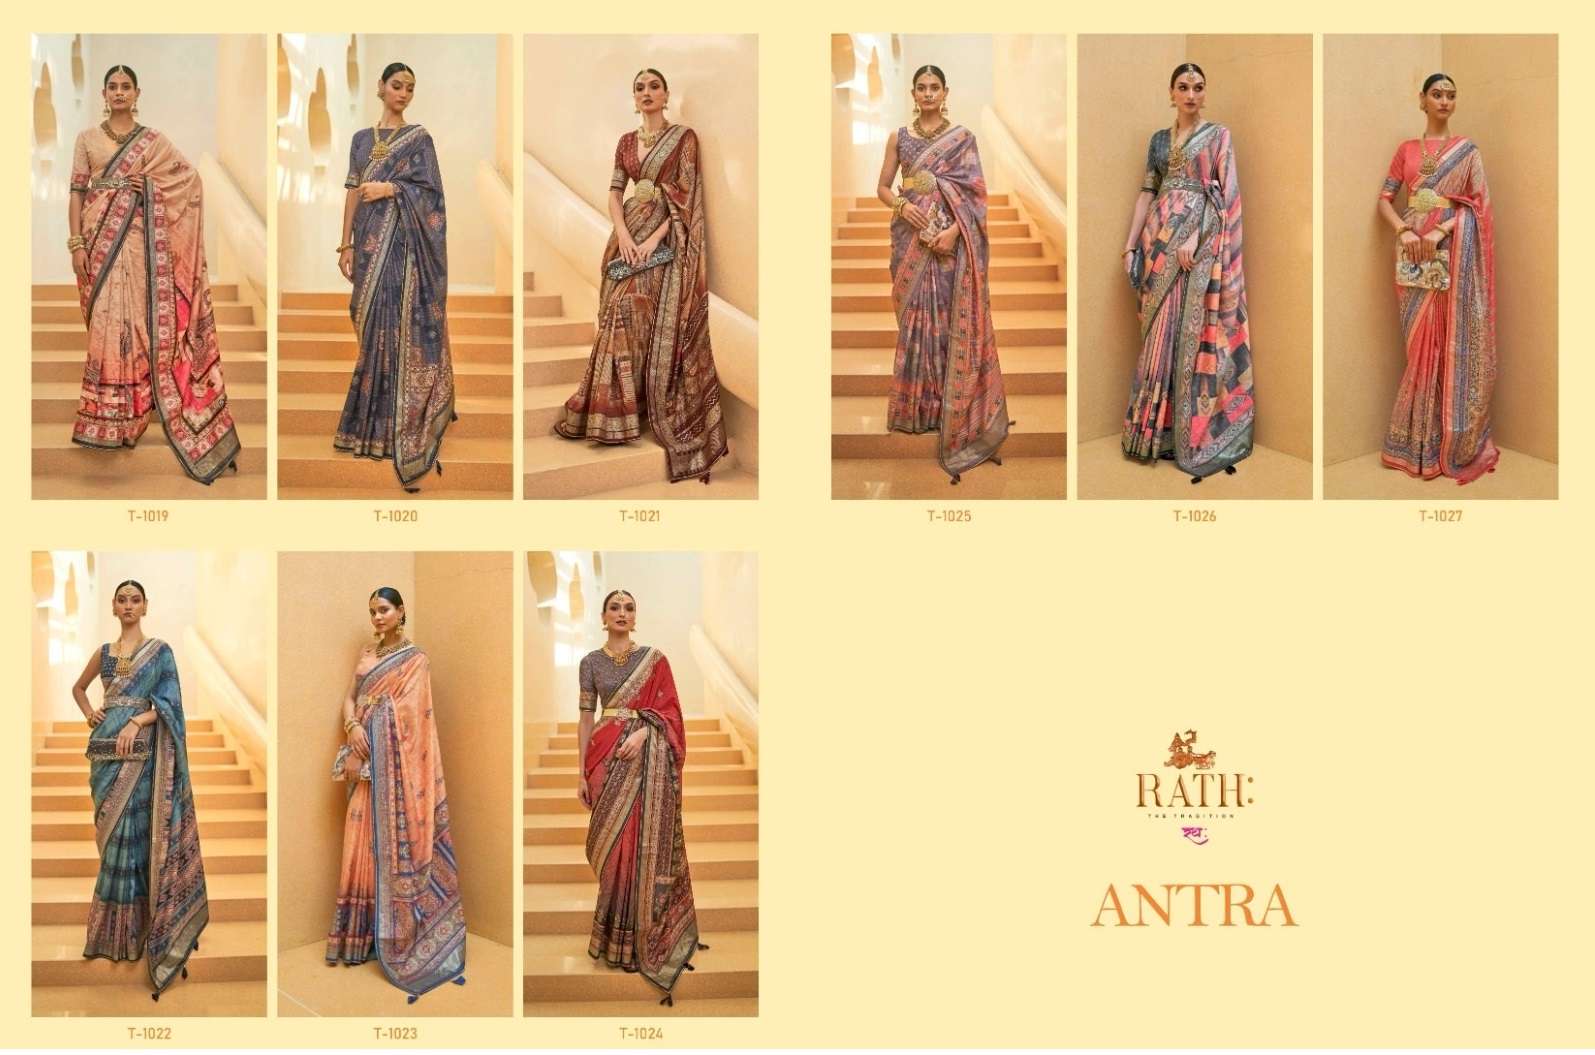 Rath Antra Silk Saree Wholesale catalog